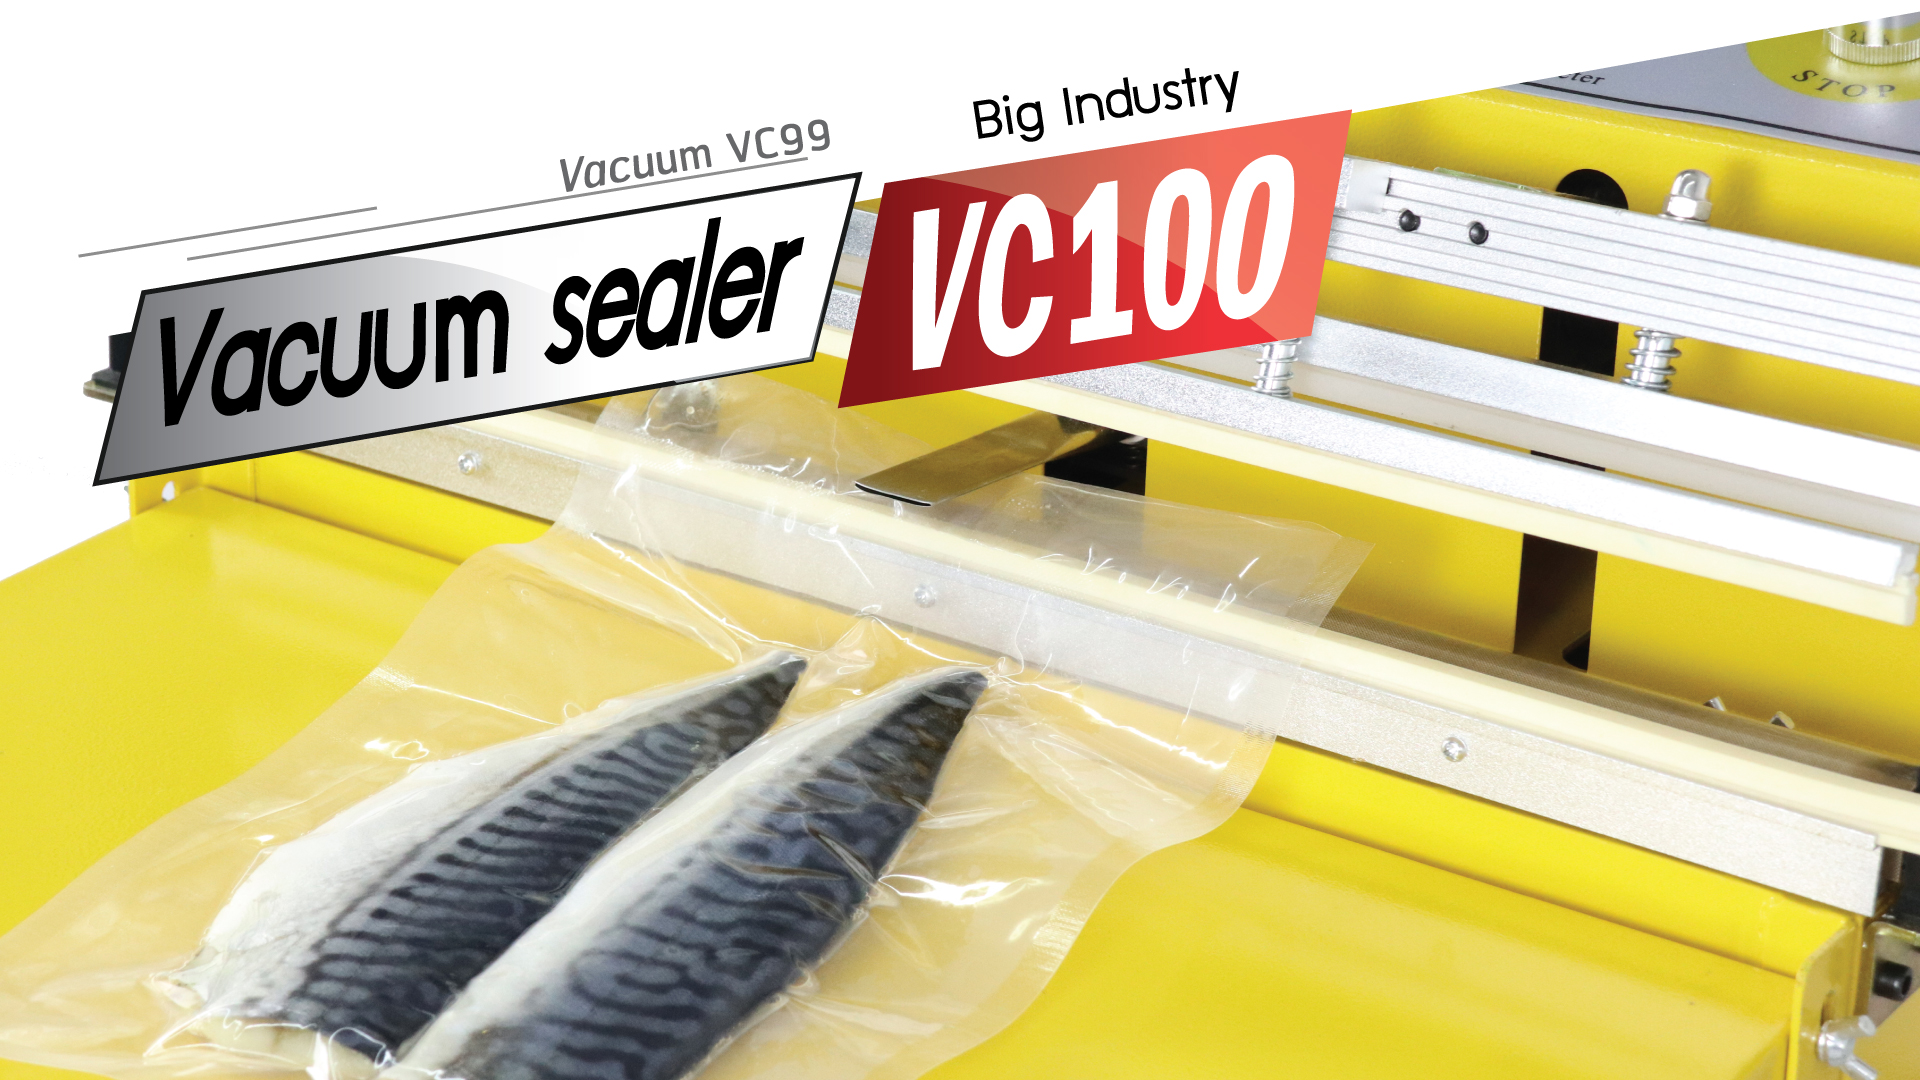 Vacuum-sealer-Big-Industry-VC100-cover2